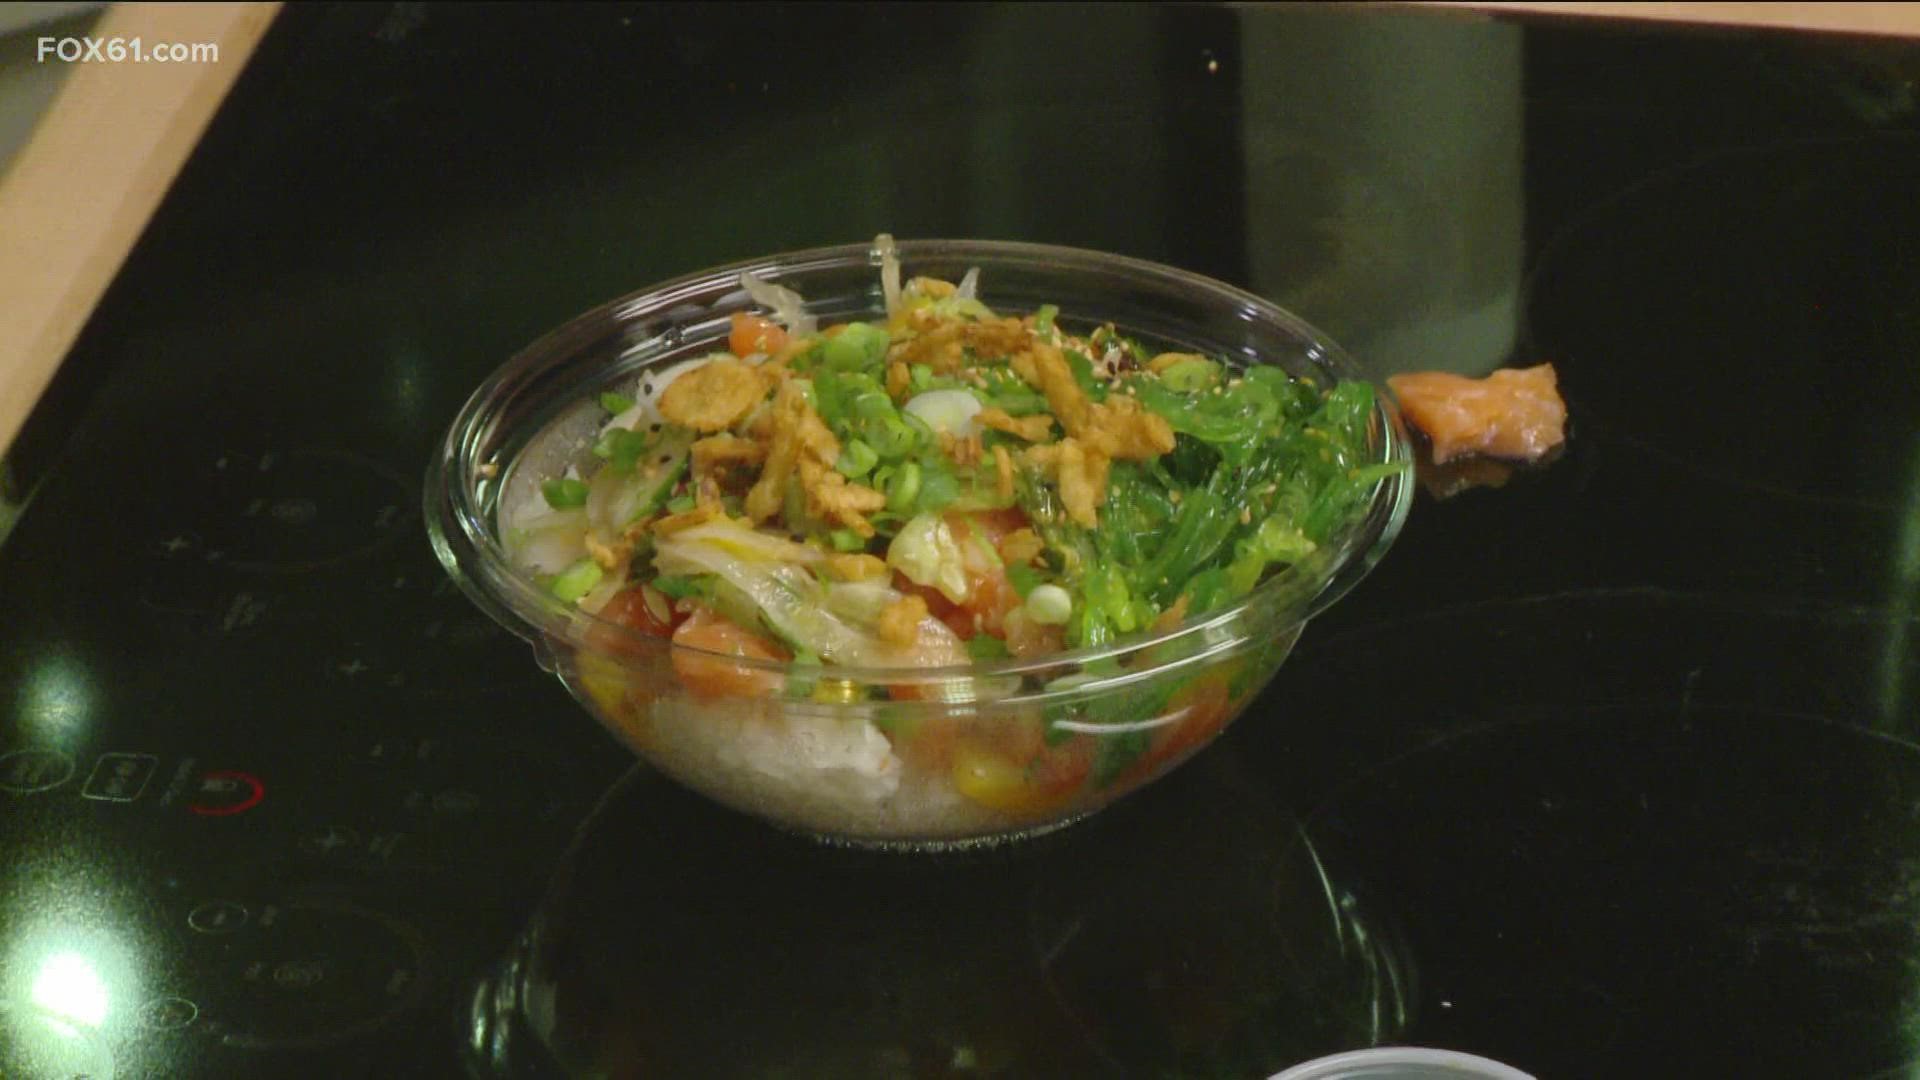 Pokeworks is sharing their Yuzu ponzu salmon bowl recipe.